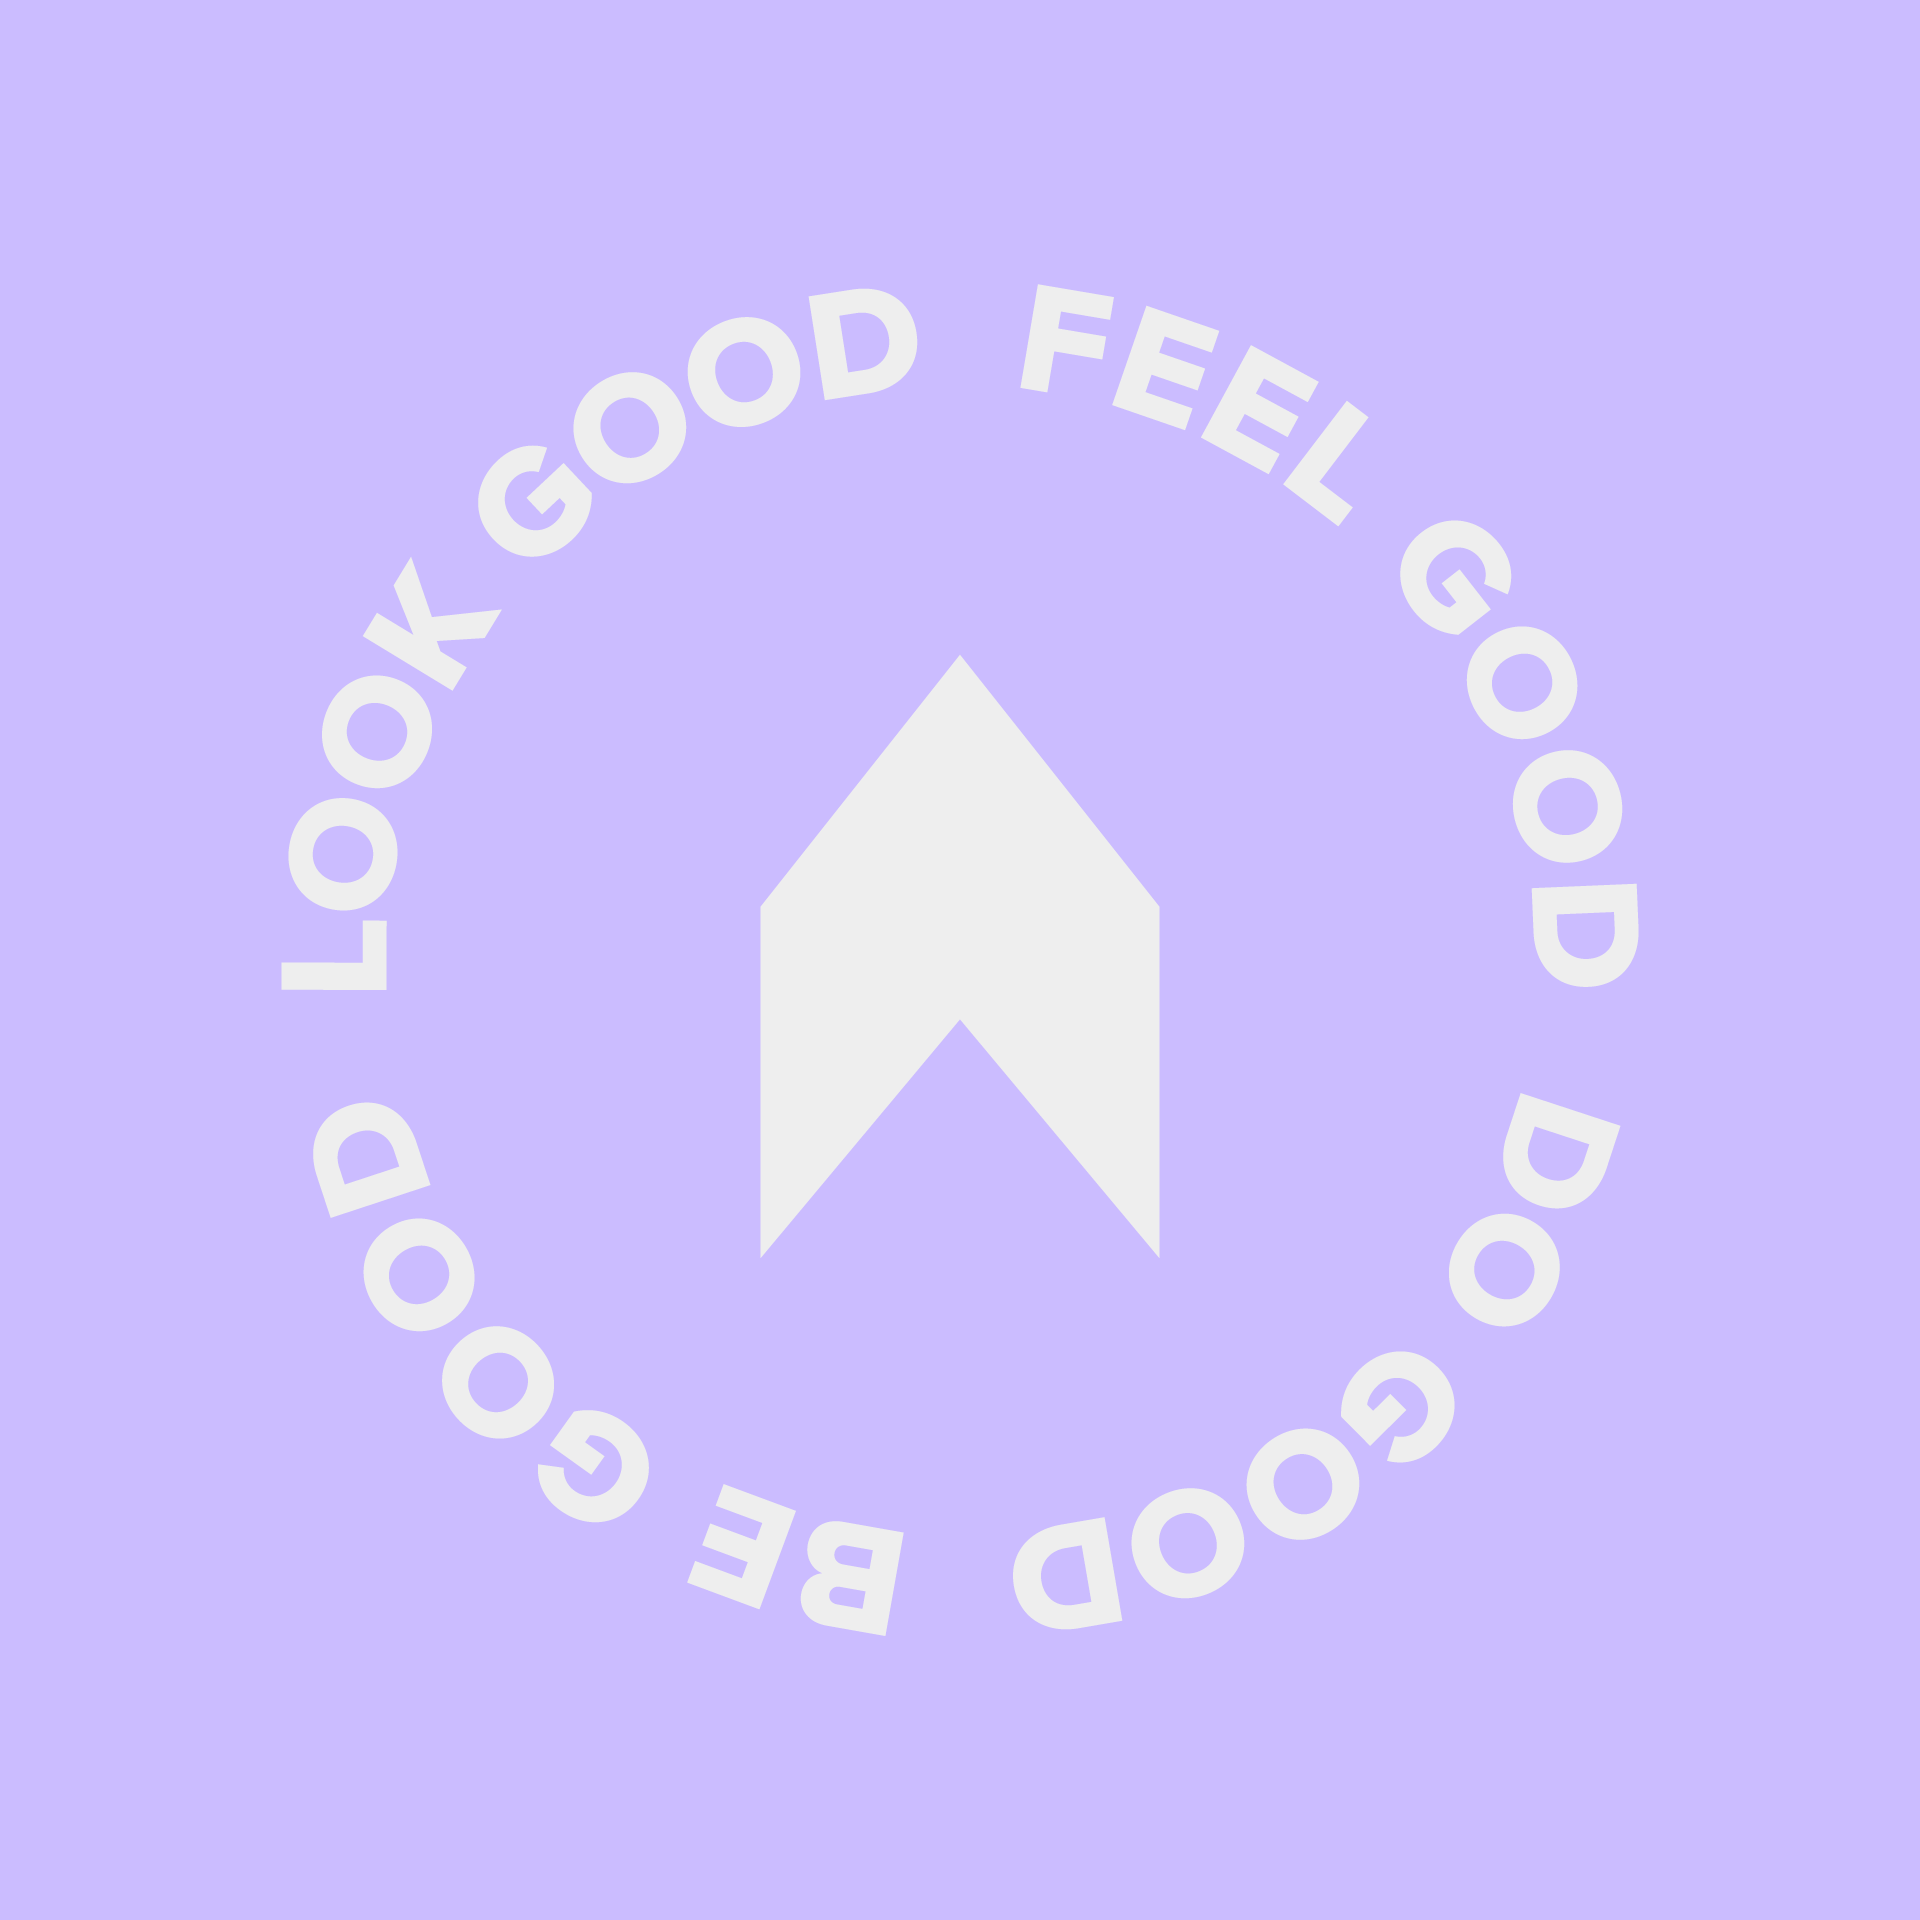 LOOK GOOD FEEL GOOD DO GOOD BE GOOD